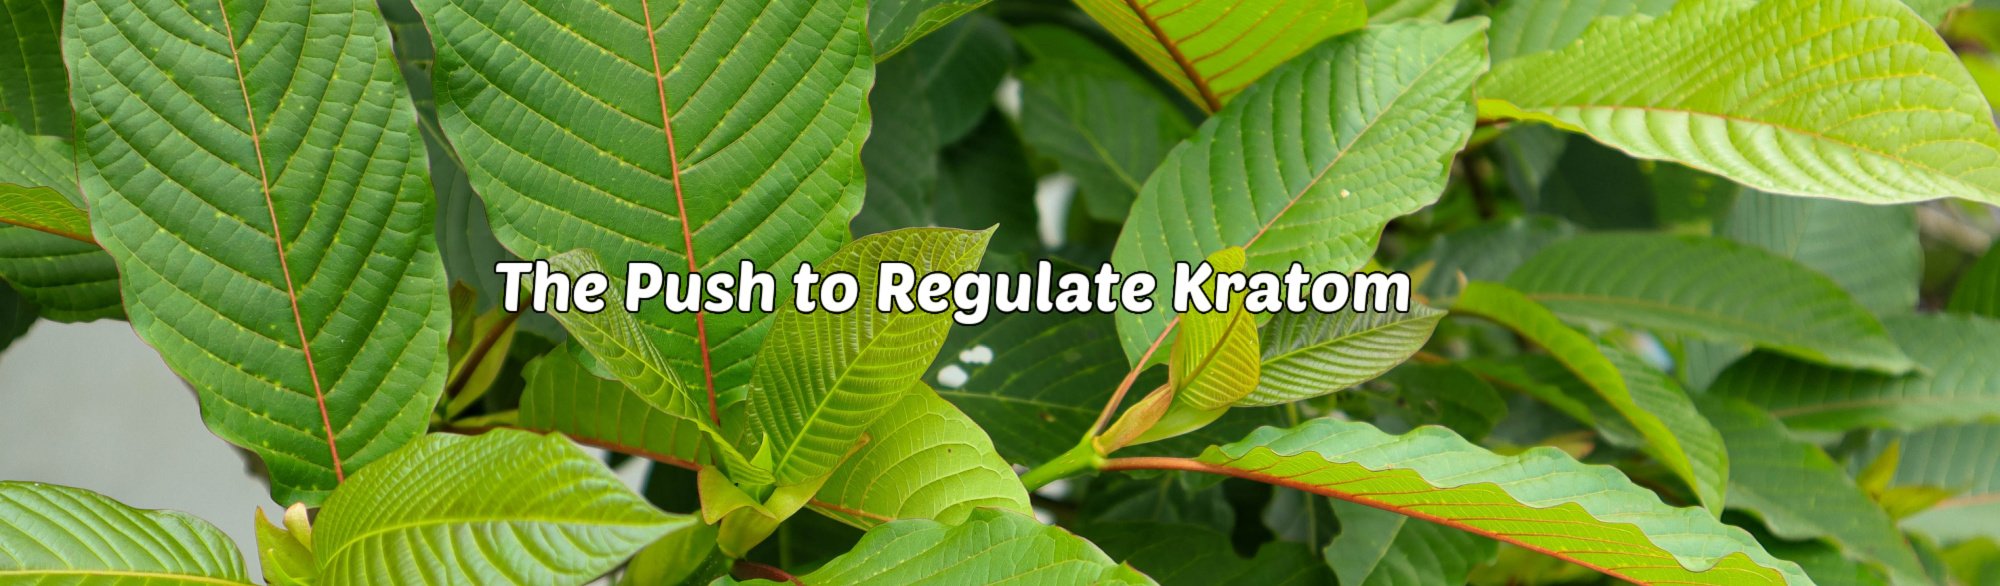 image of the push to regulate kratom